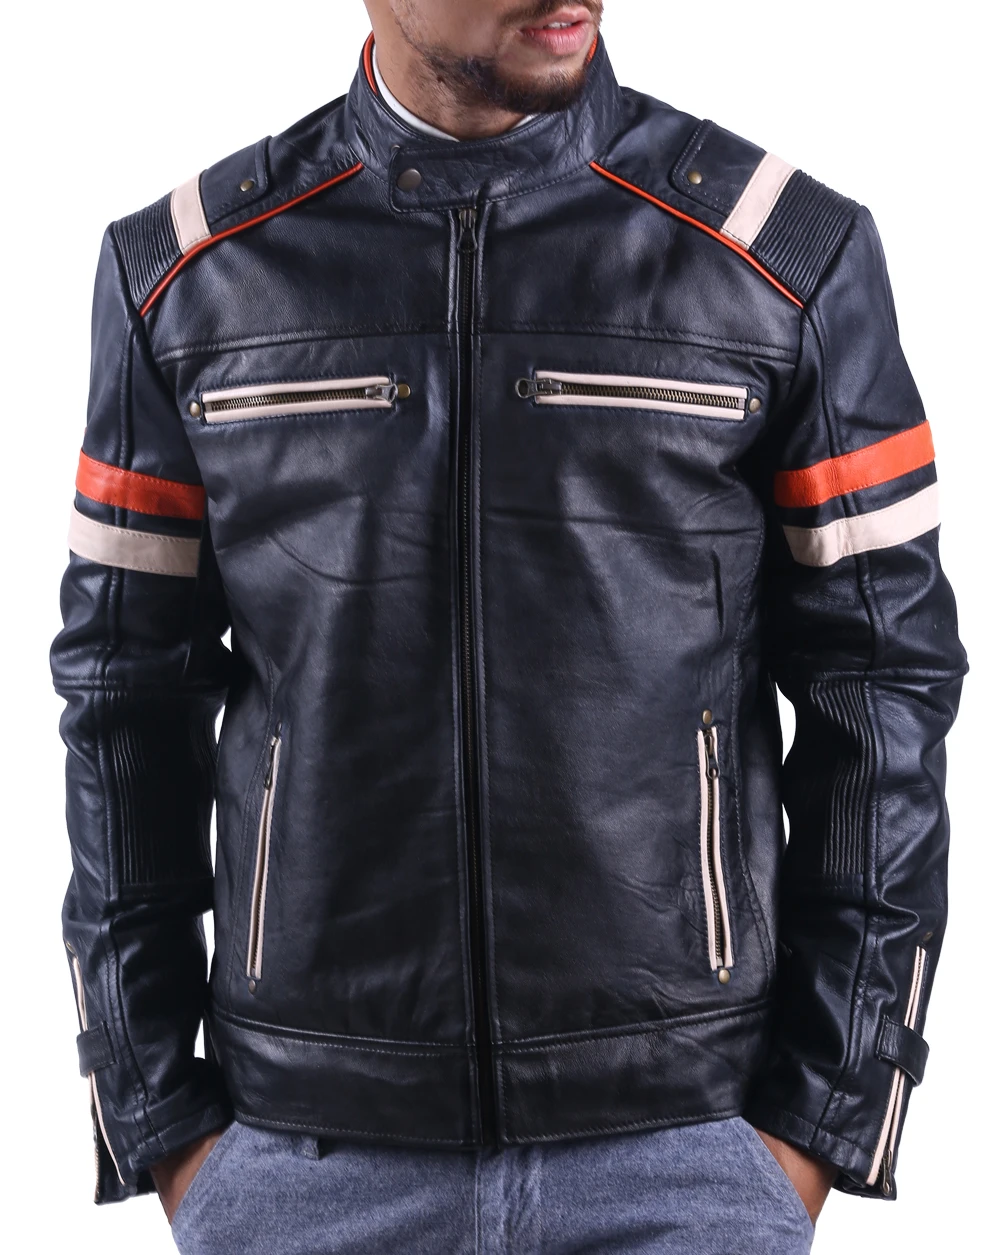 Retro-Black retro leather biker jacket black